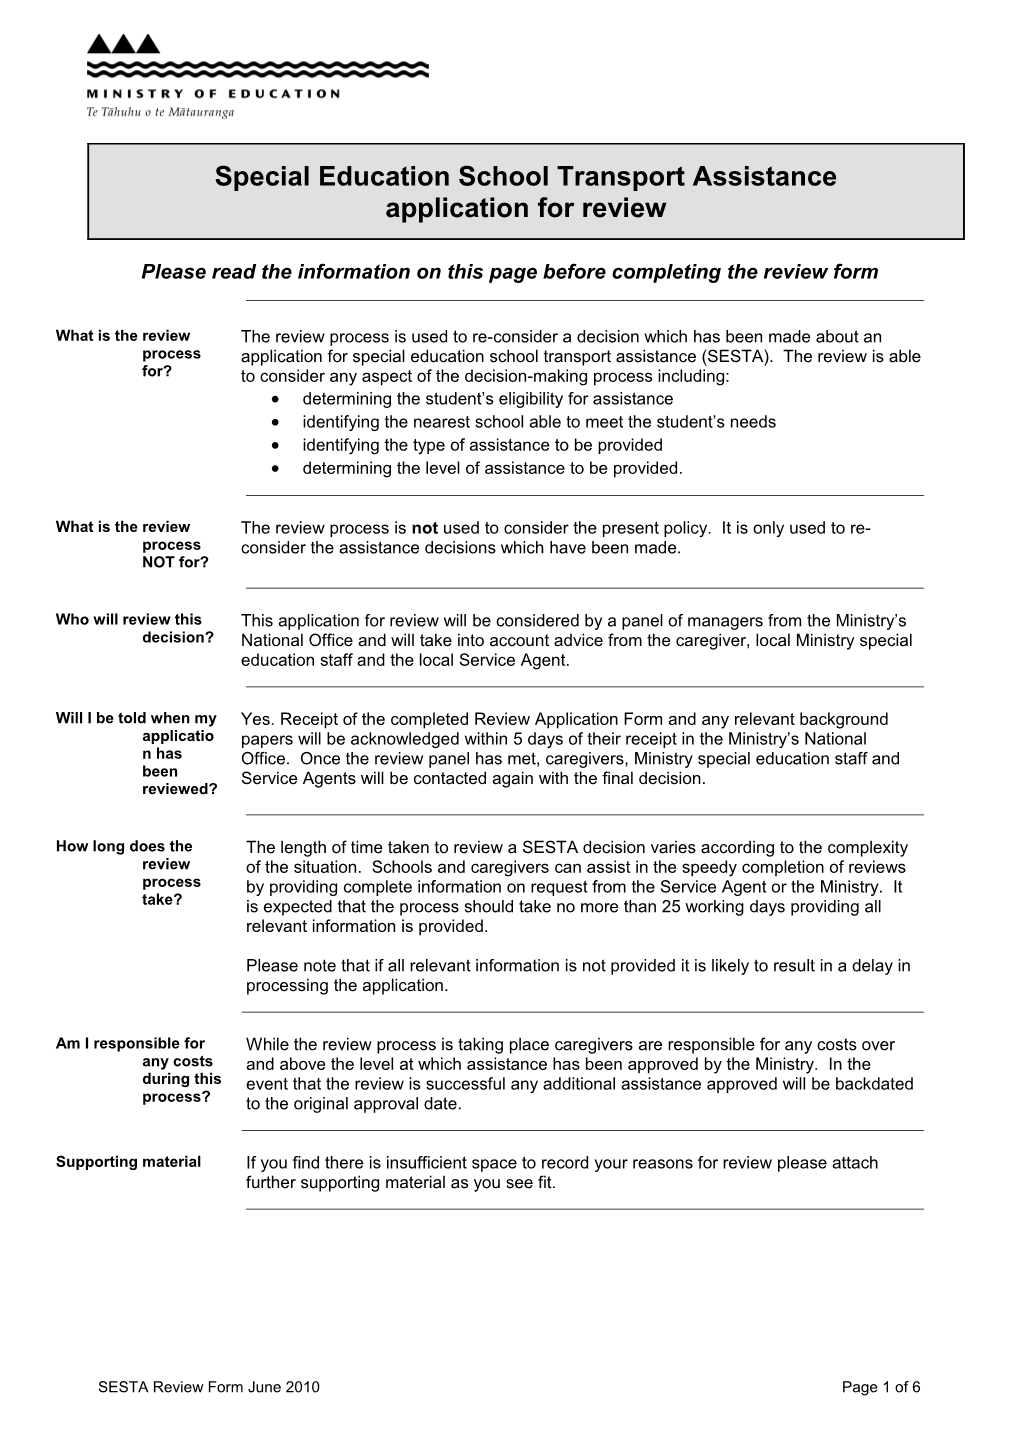 SESTA Review Application Form